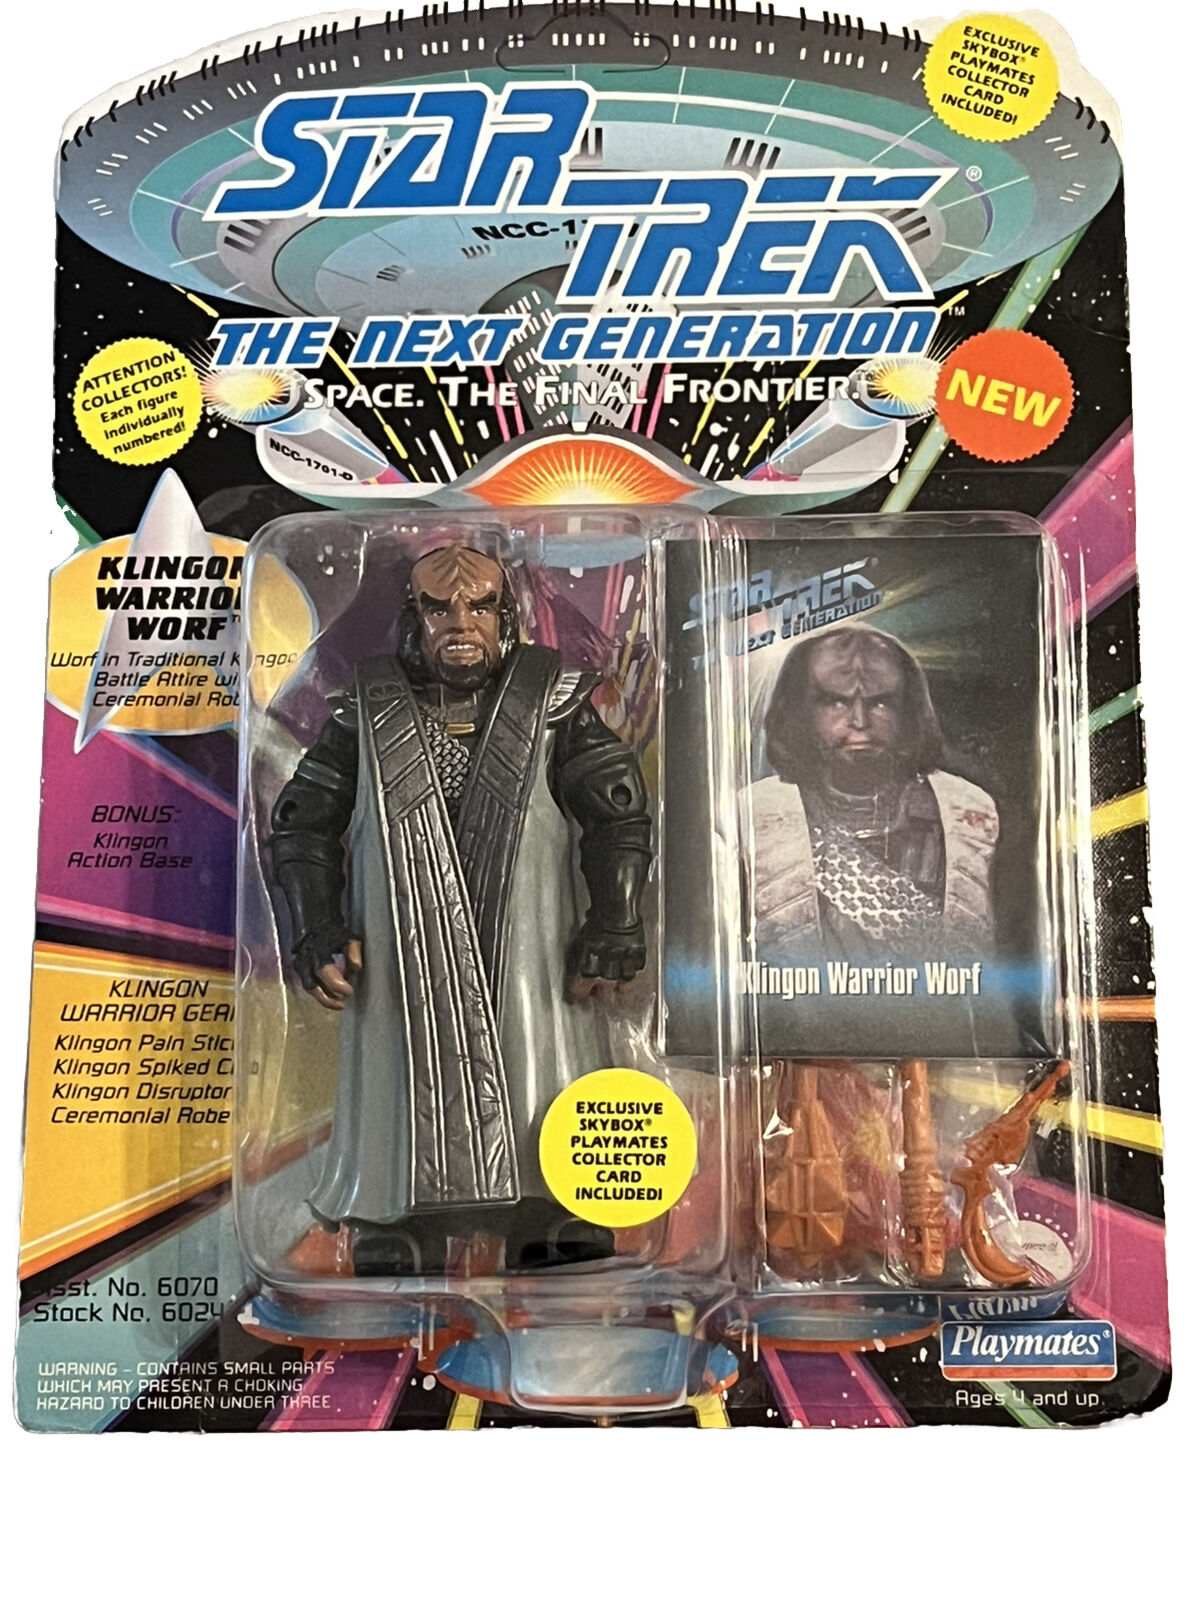 NIB 1993 STAR TREK Next Generation Klingon Warrior WORF Action Figure 6024